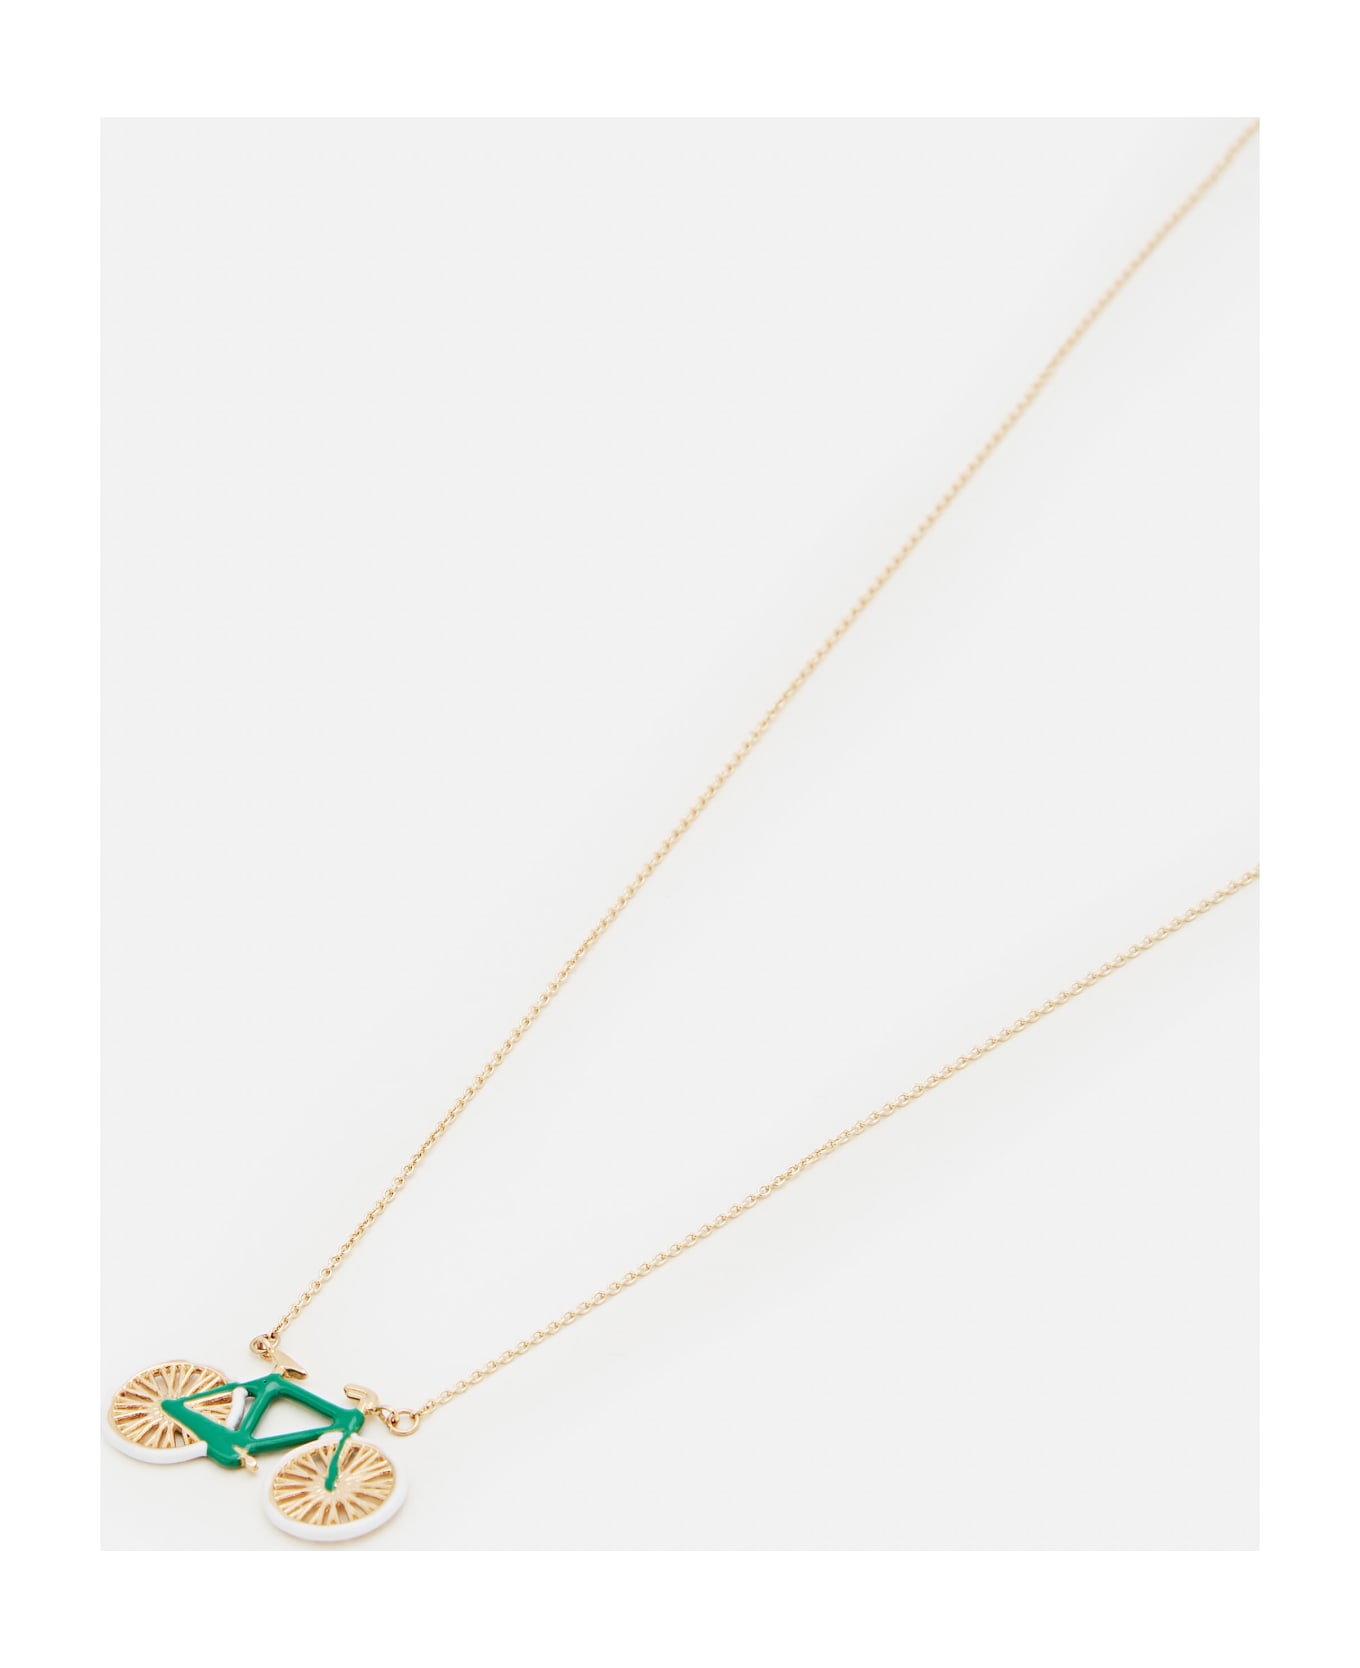 Aliita 9k Gold Bici Polished Necklace - Green